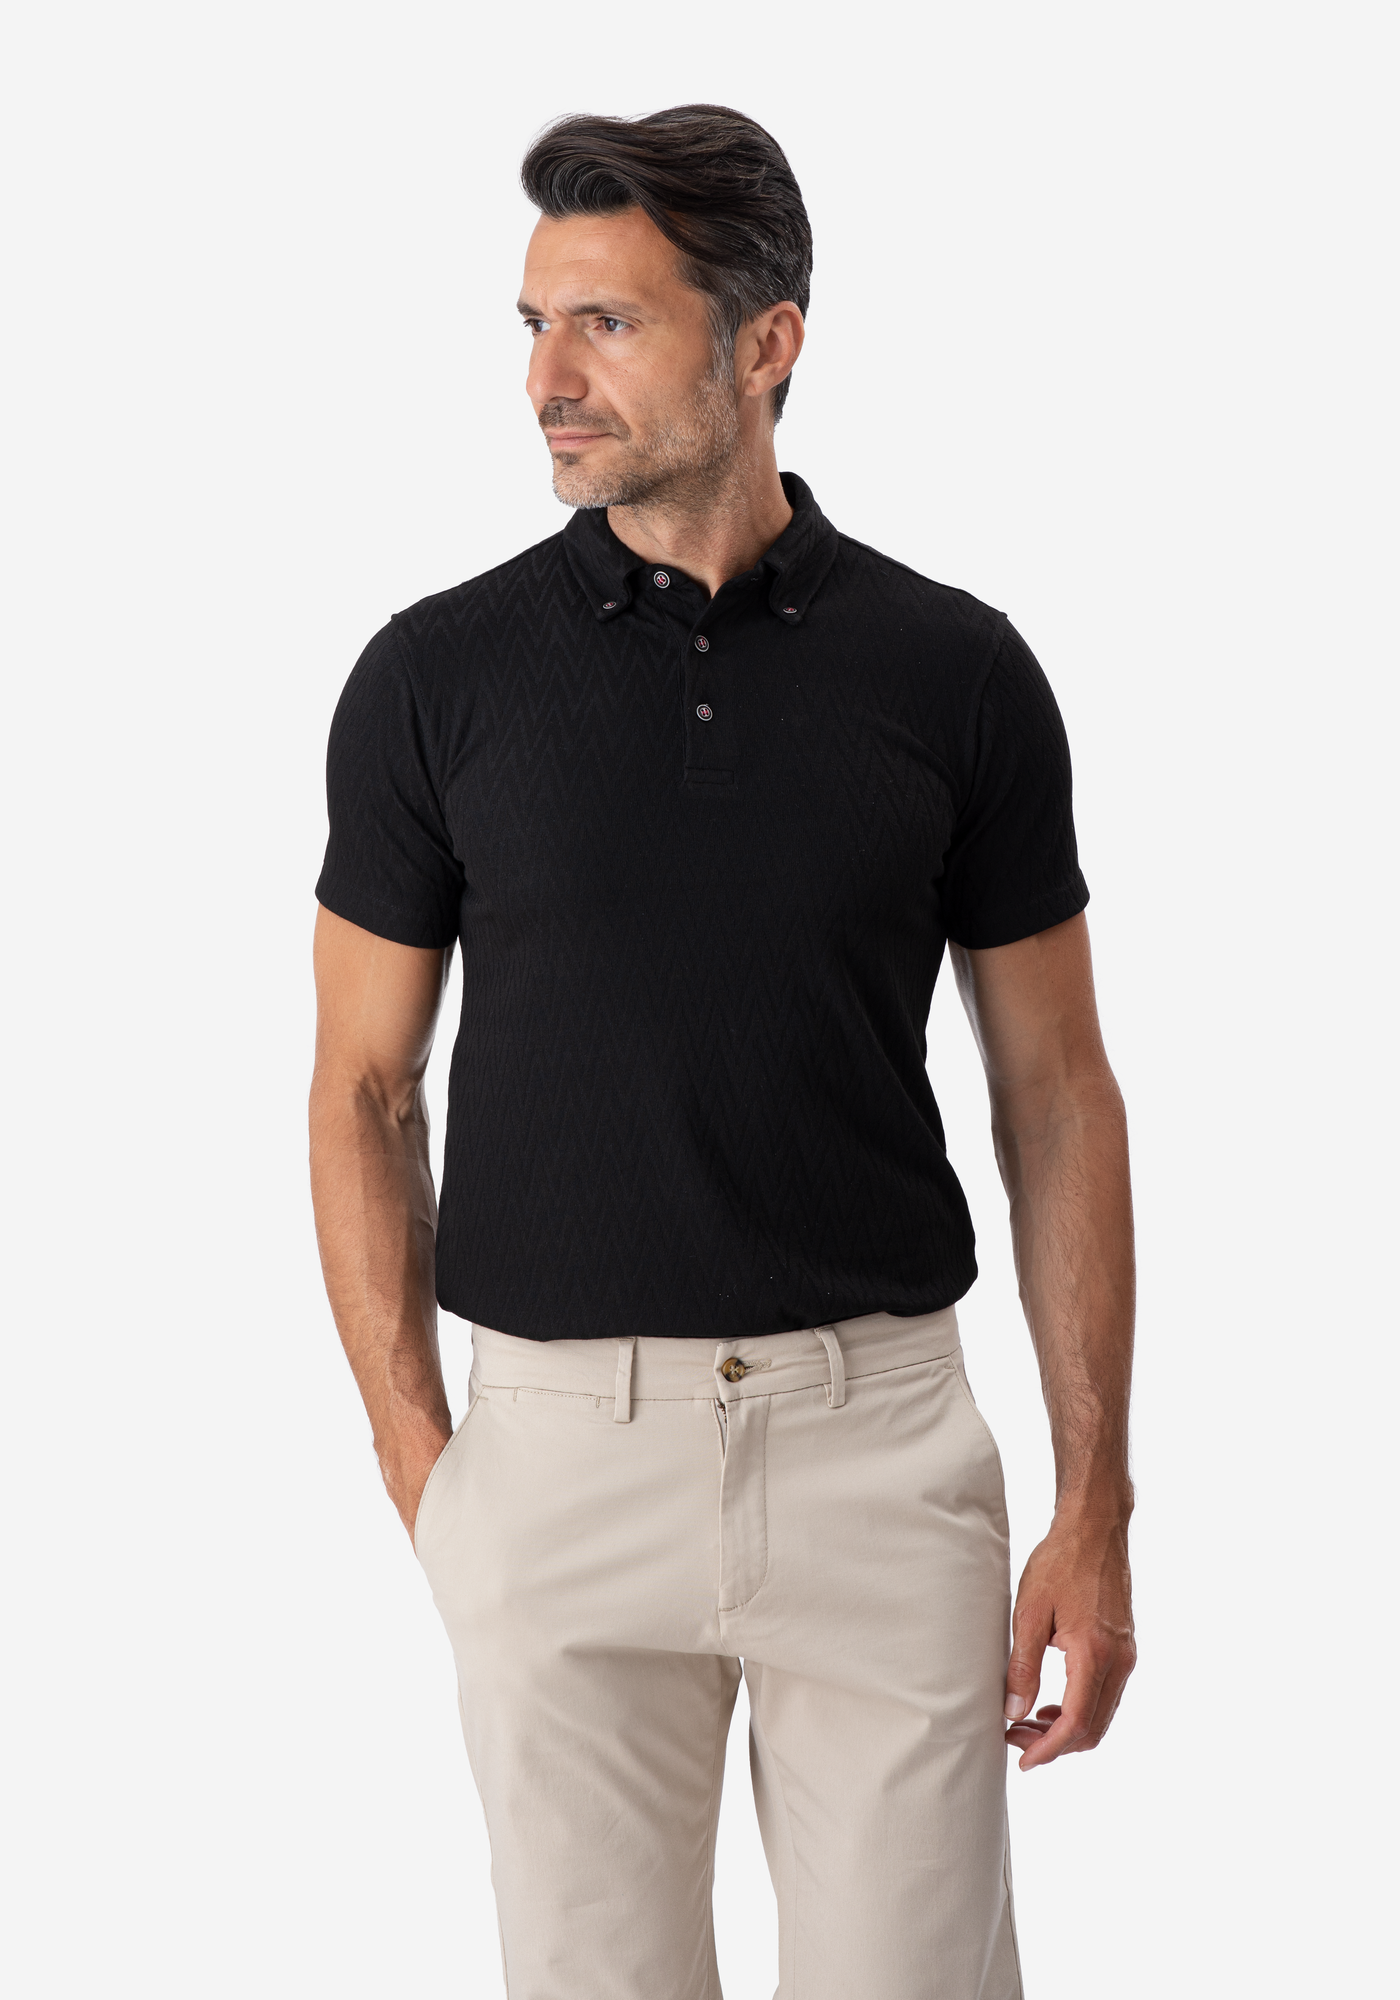 Pitch Black Jacquard Polo Shirt